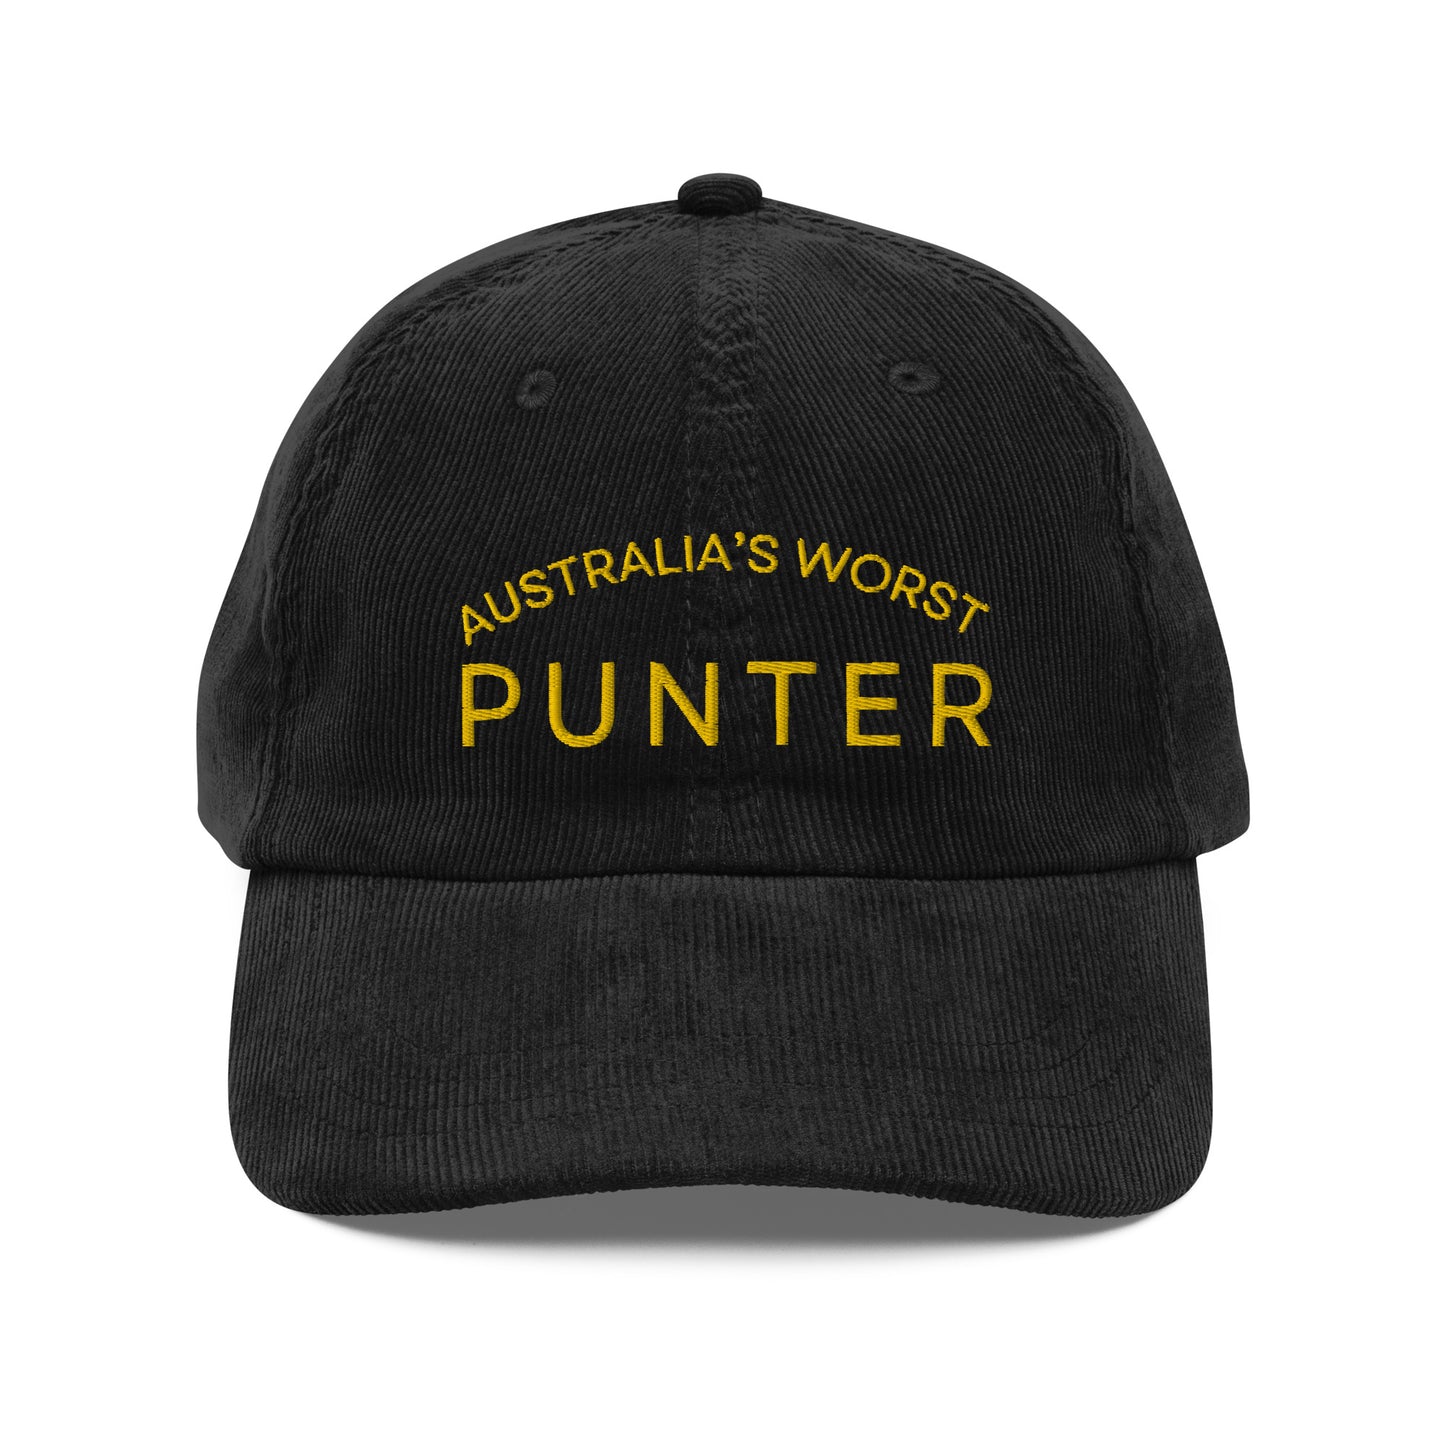 Australia's Worst Punter - Vintage Corduroy Cap